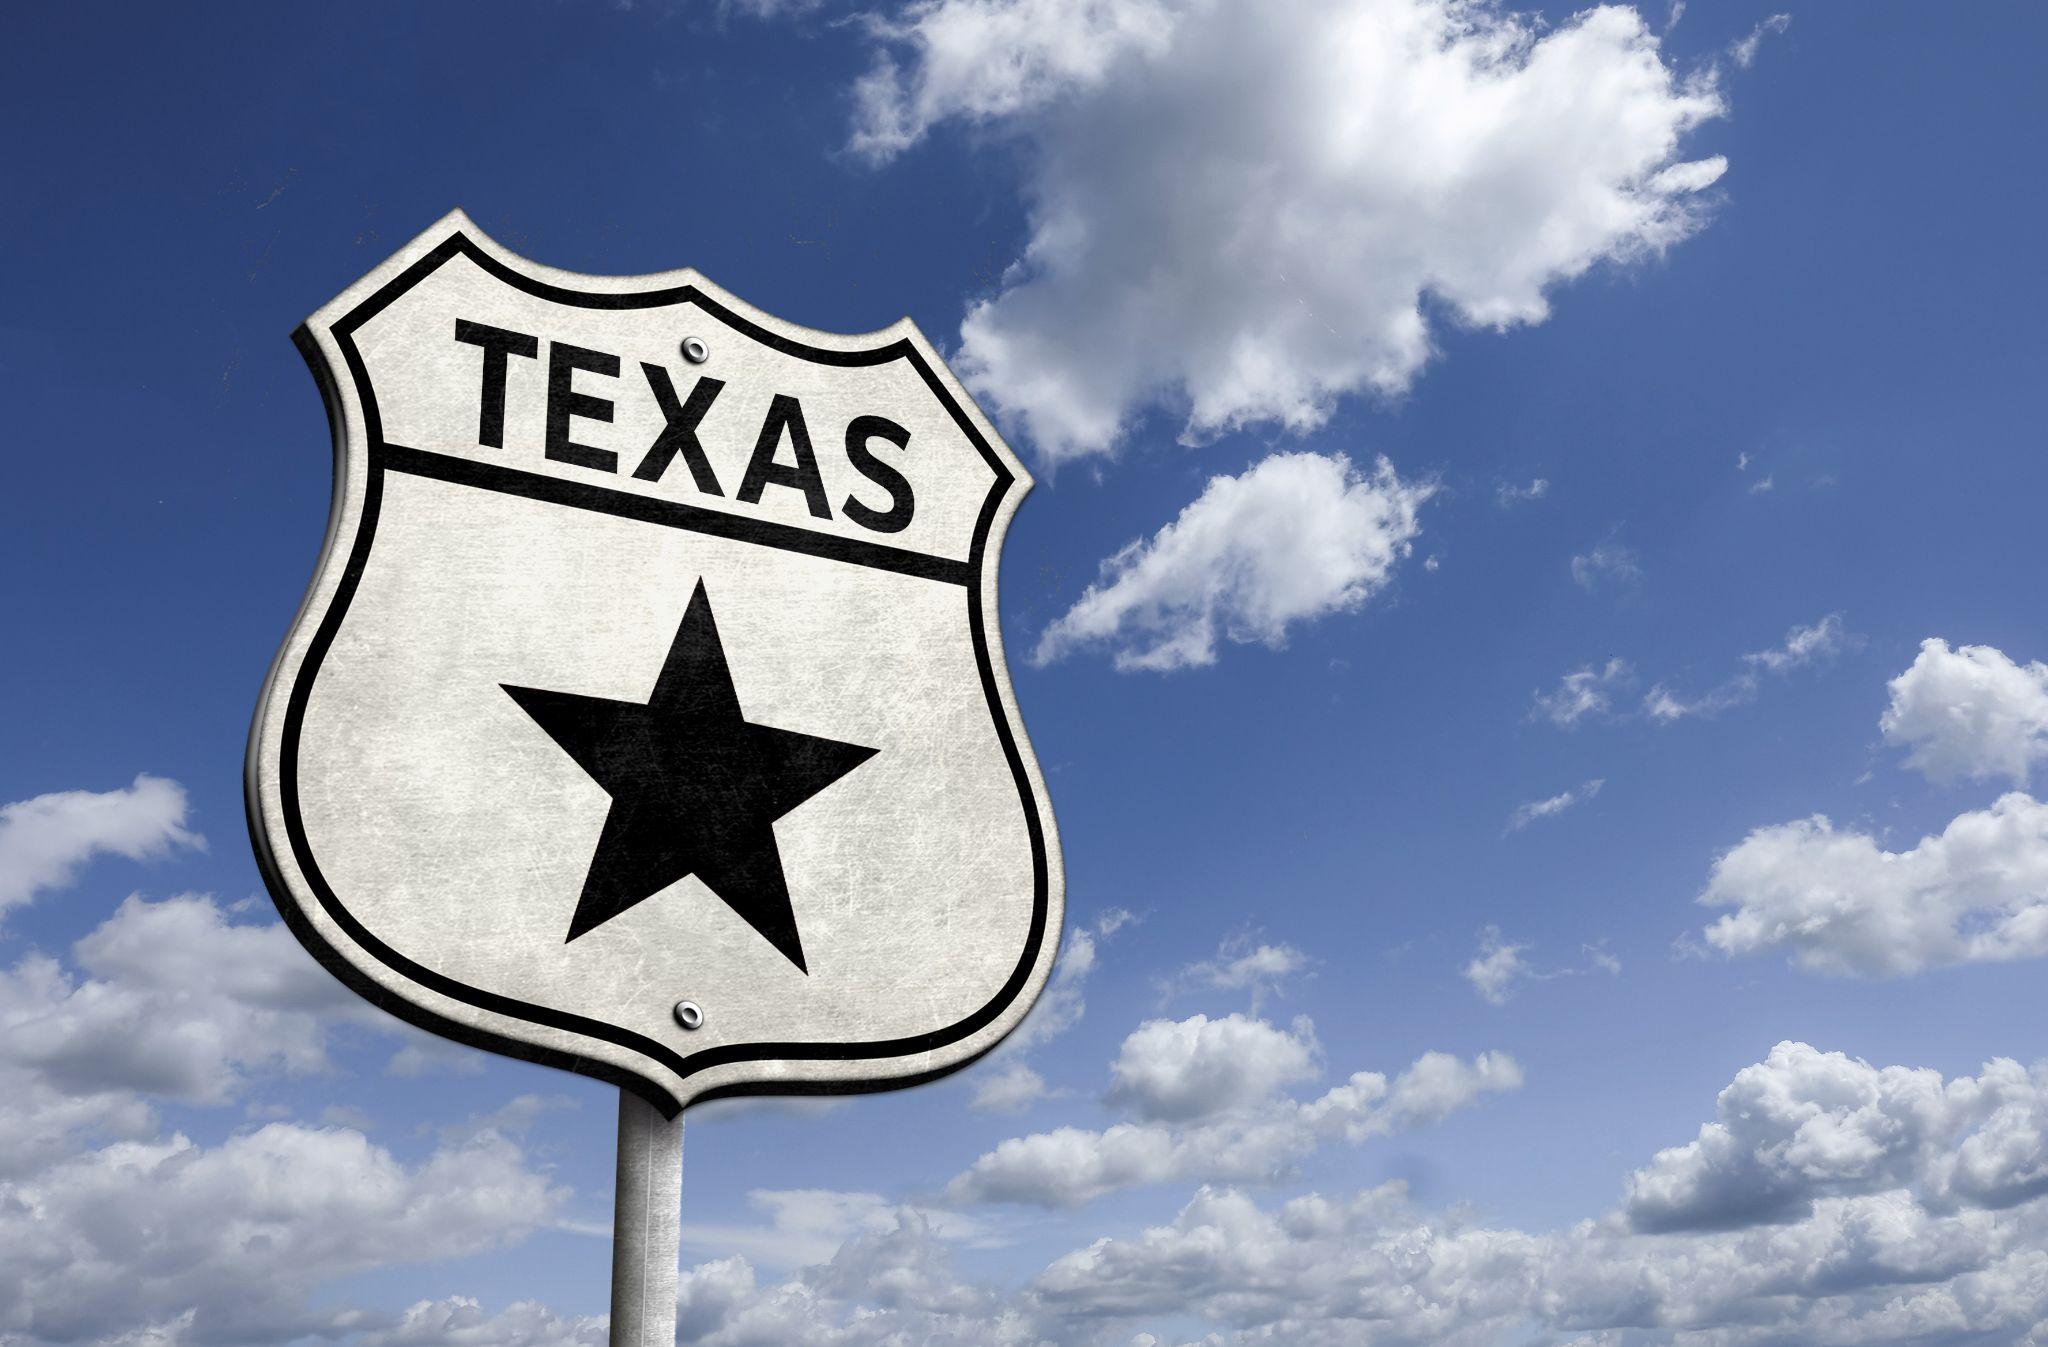 Texas roadway sign